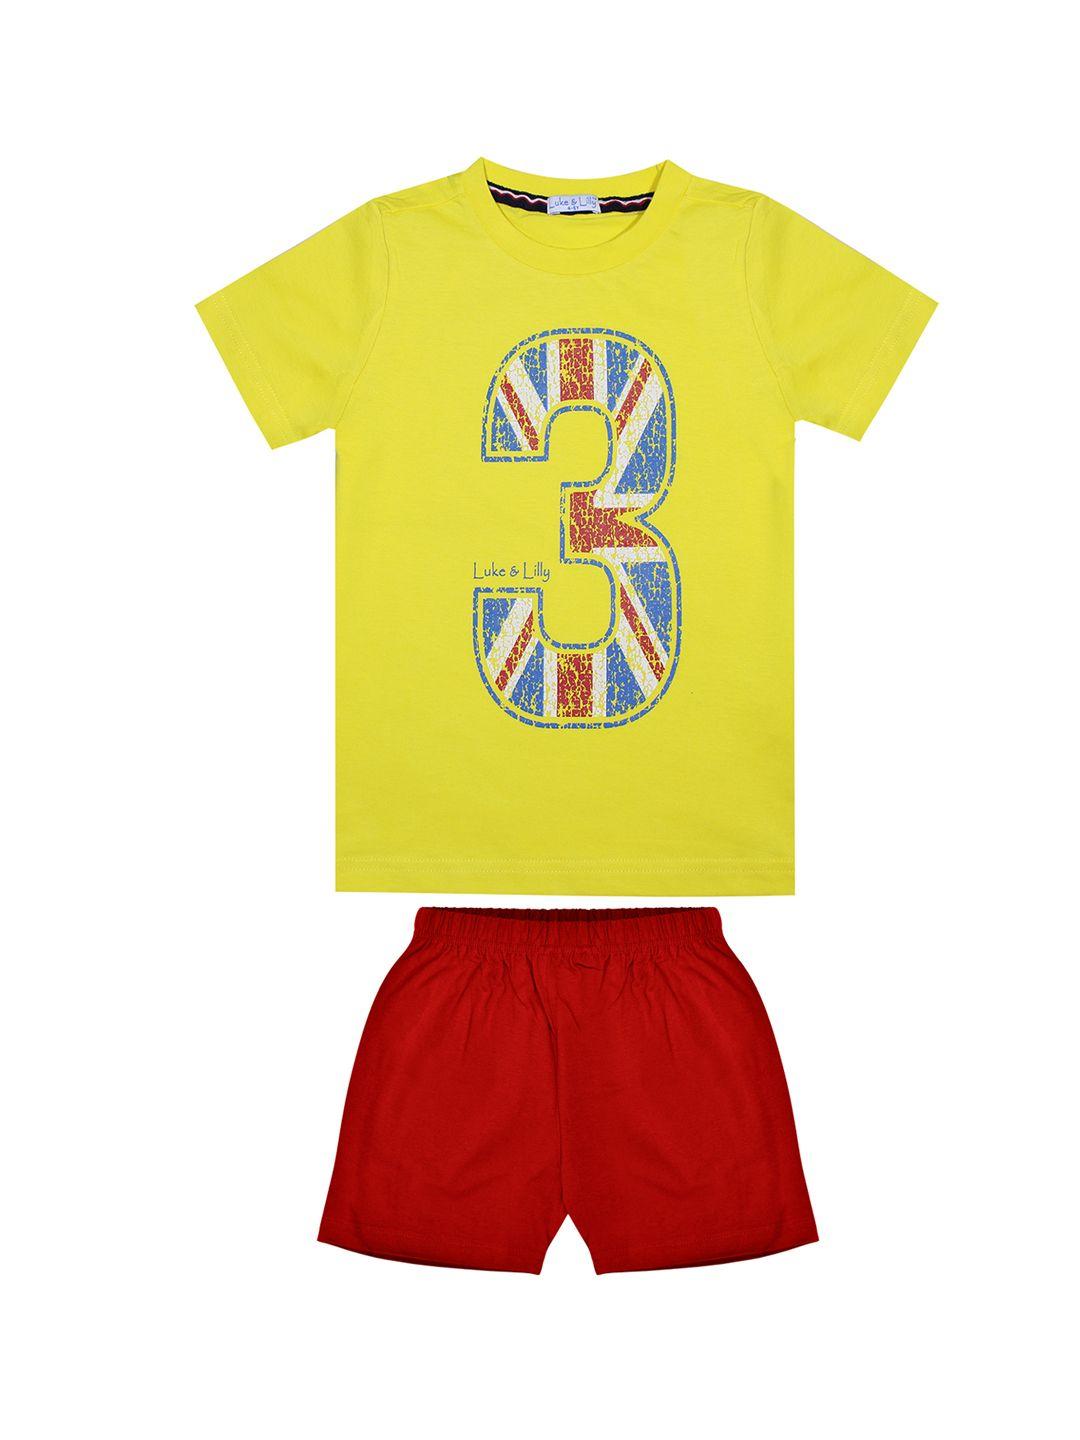 luke & lilly boys yellow & red printed clothing set